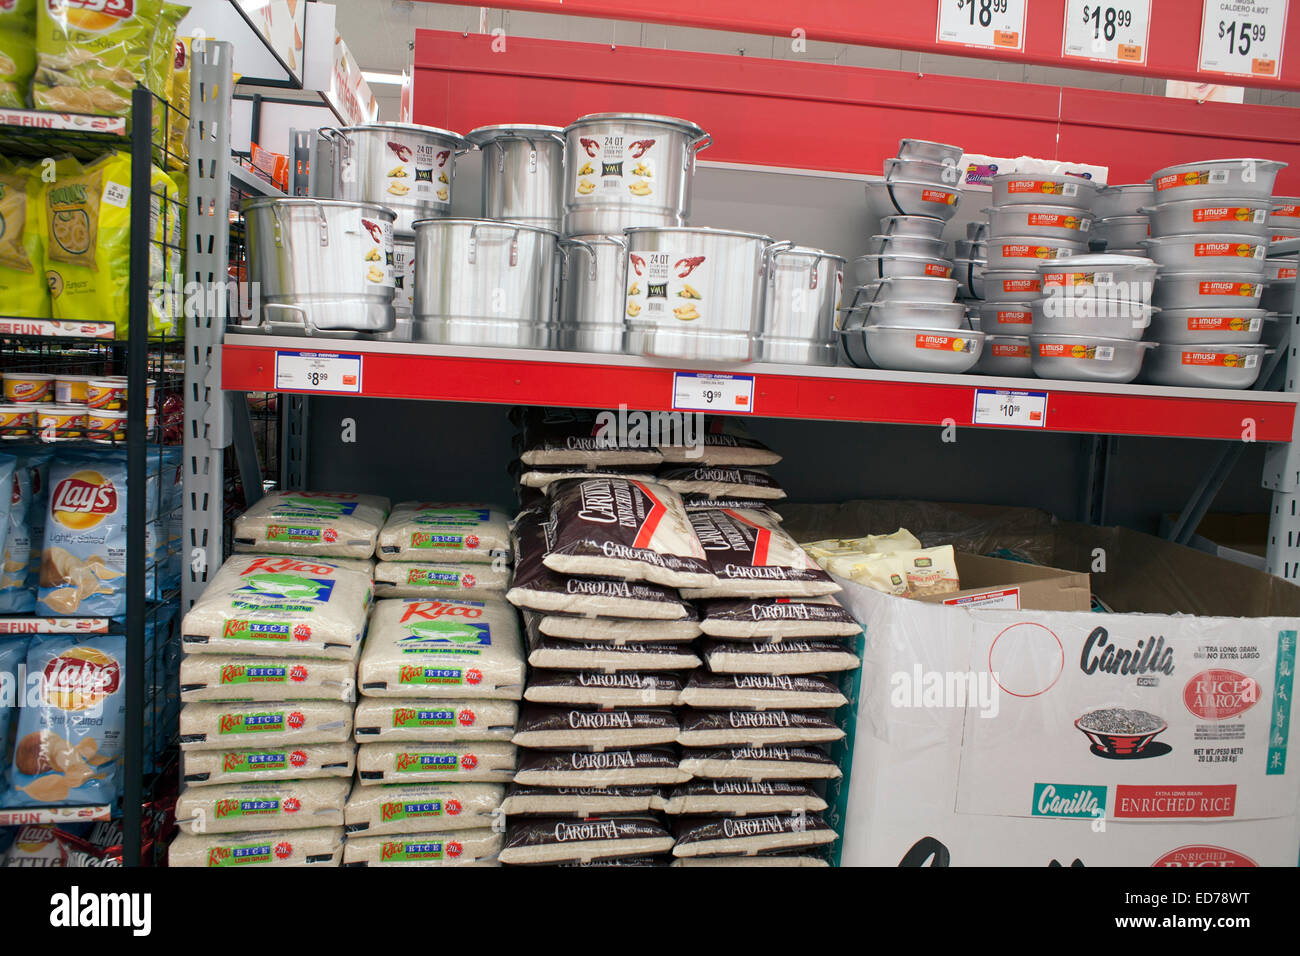 Abschnitt "Reis" am Preis Ritus, ein großer Supermarkt in Pittsfield, Massachusetts. Stockfoto